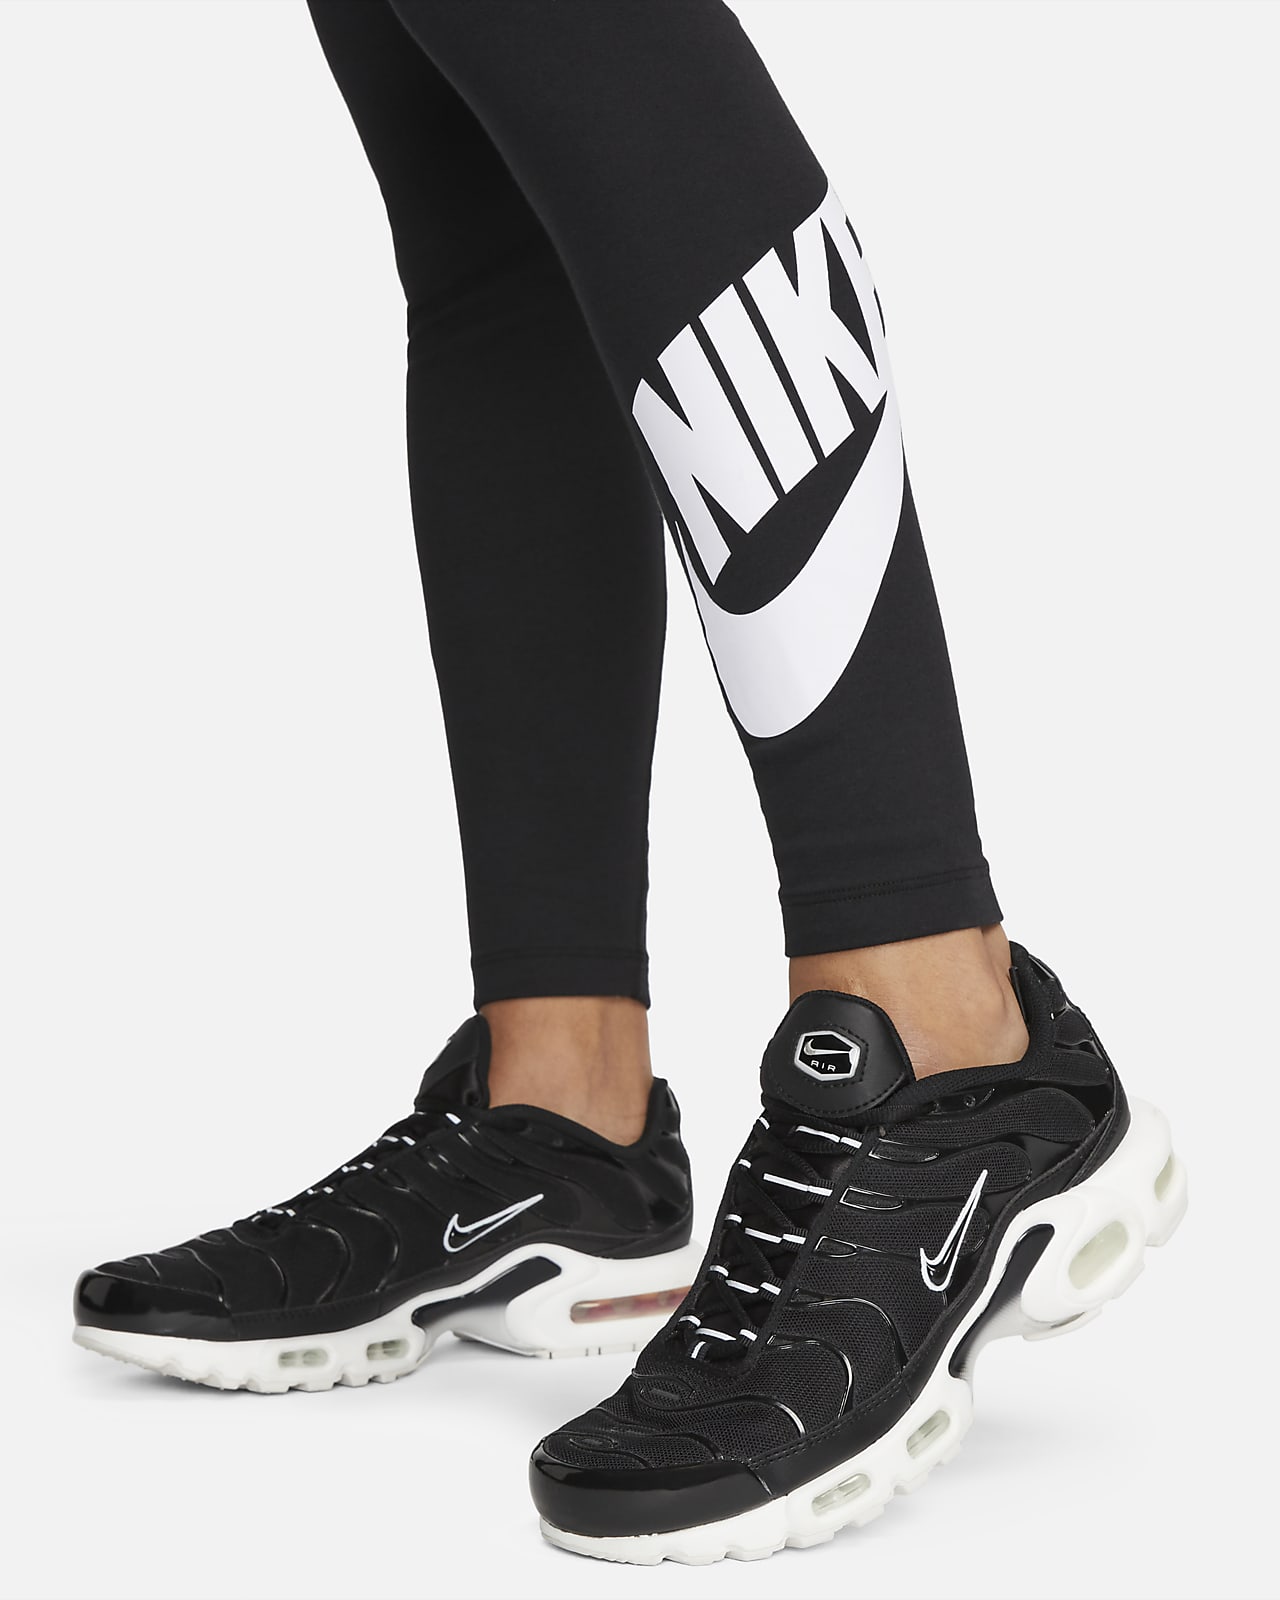 Nike Women's Sportswear Essential Leggings Futura HR (Black/White, Size XS), Women's